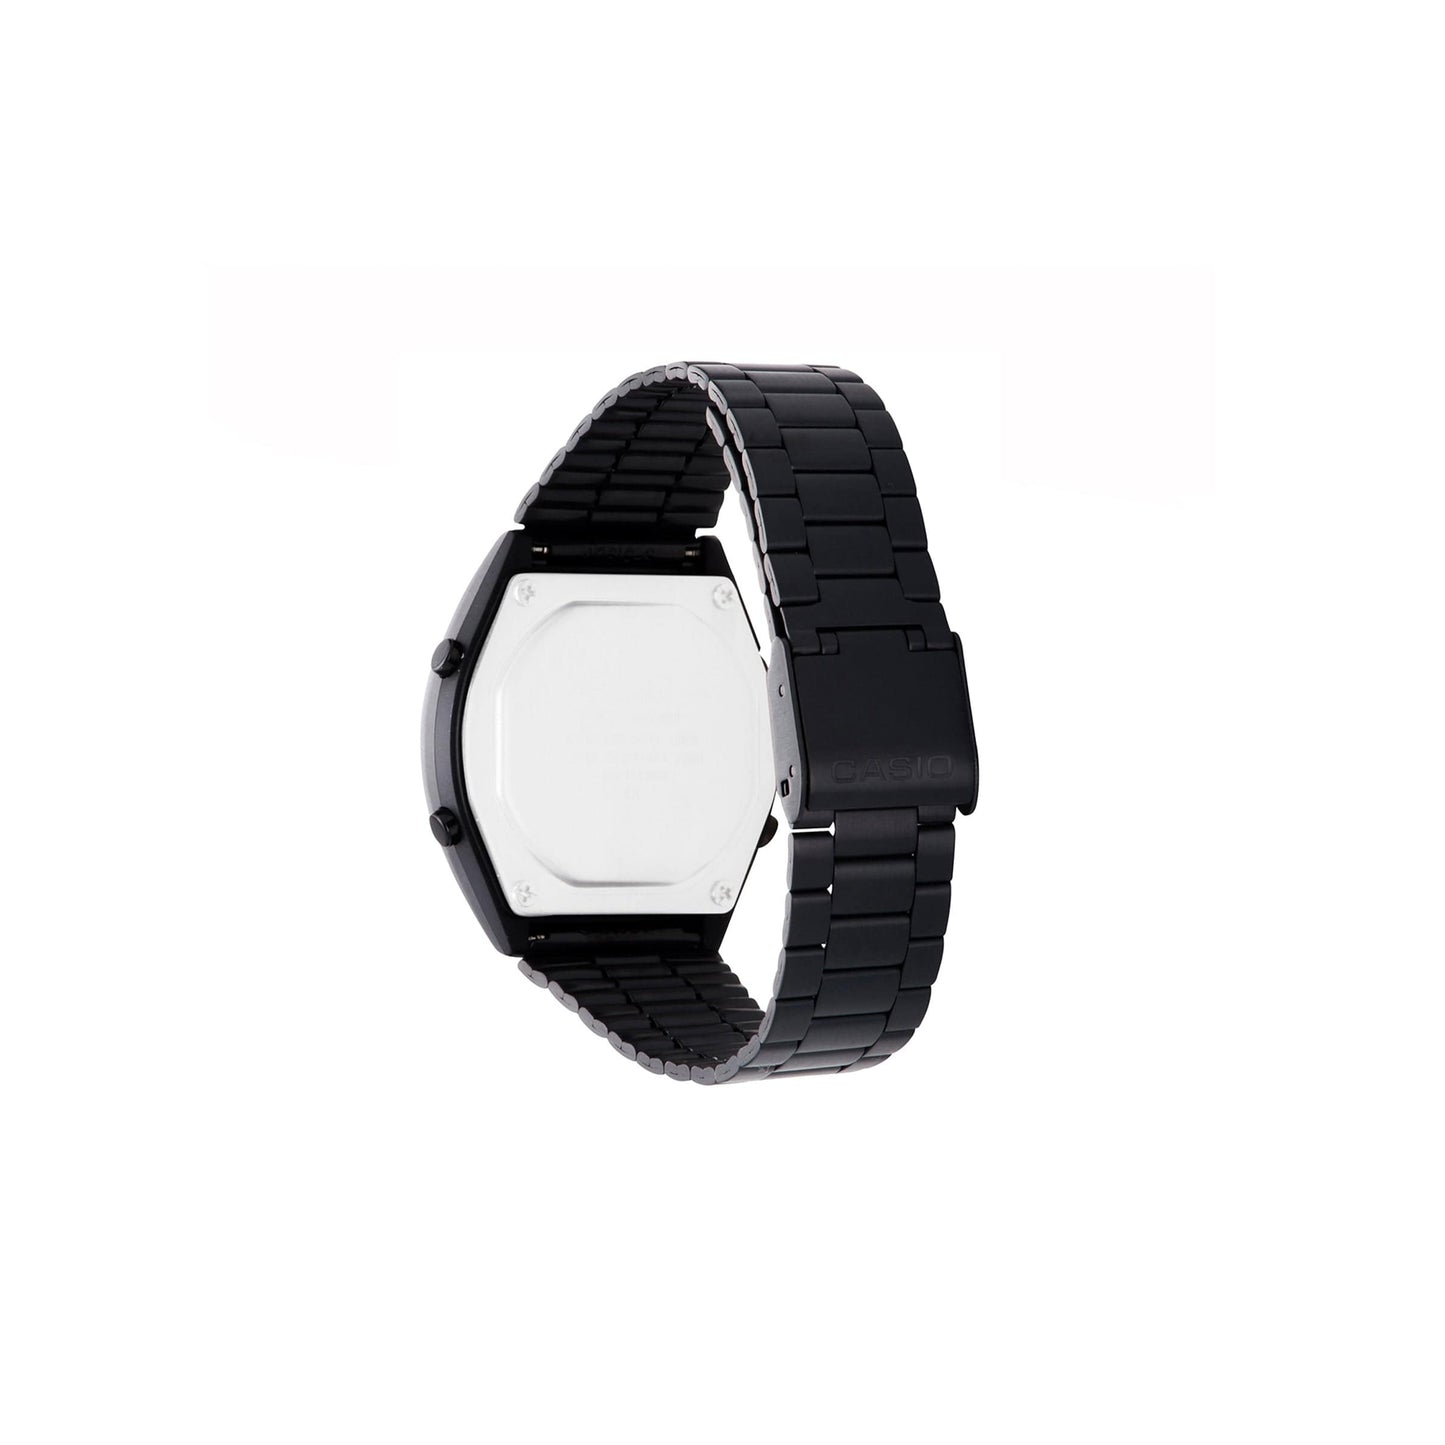 Casio Watches BLACK / O/S B640WB-1BVT